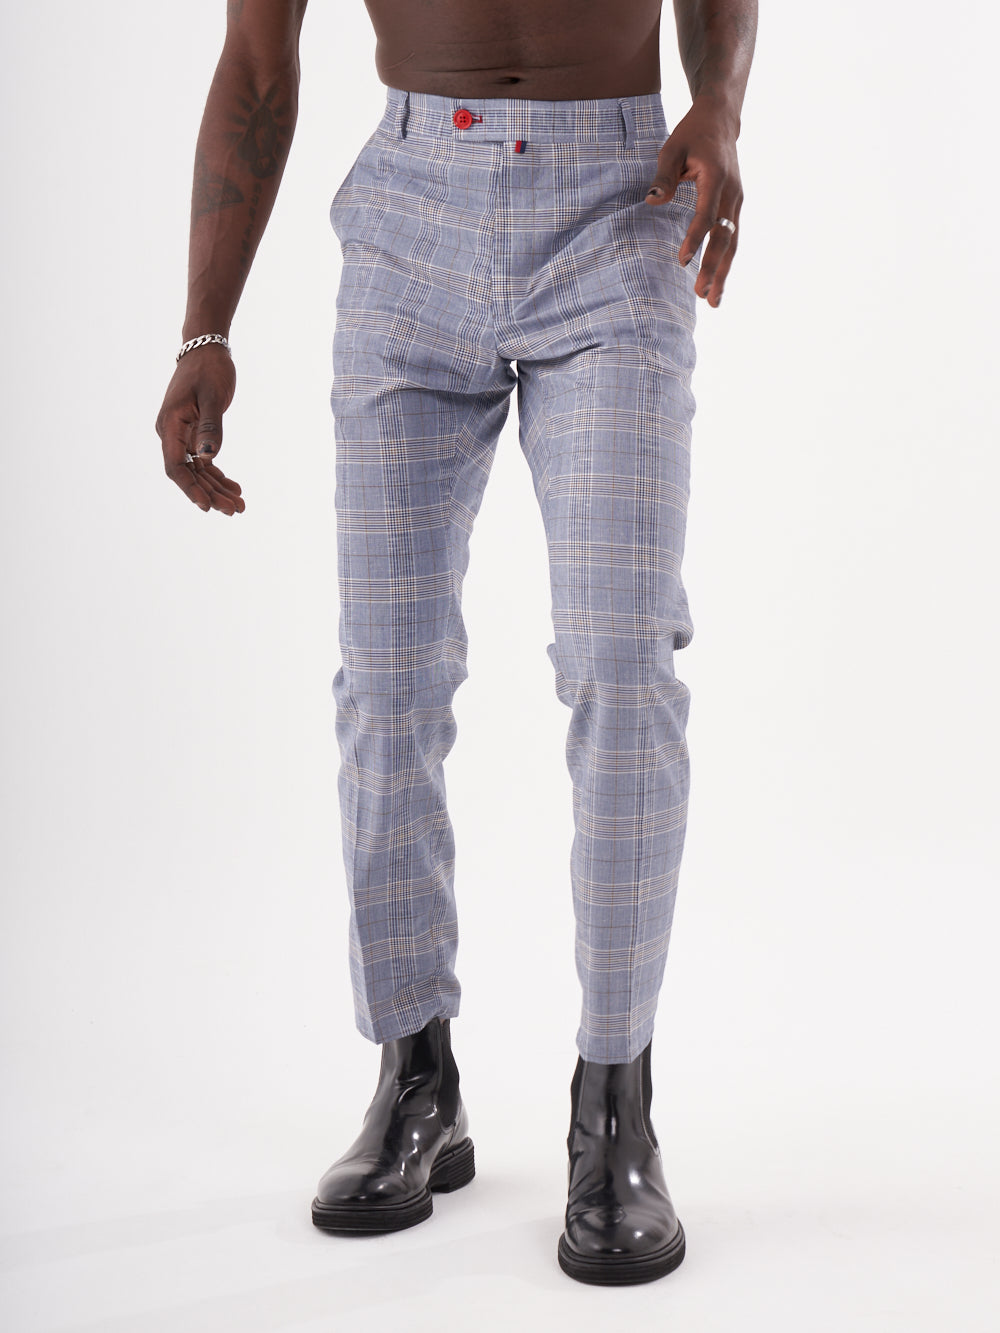 A black man wearing Moraine pants.